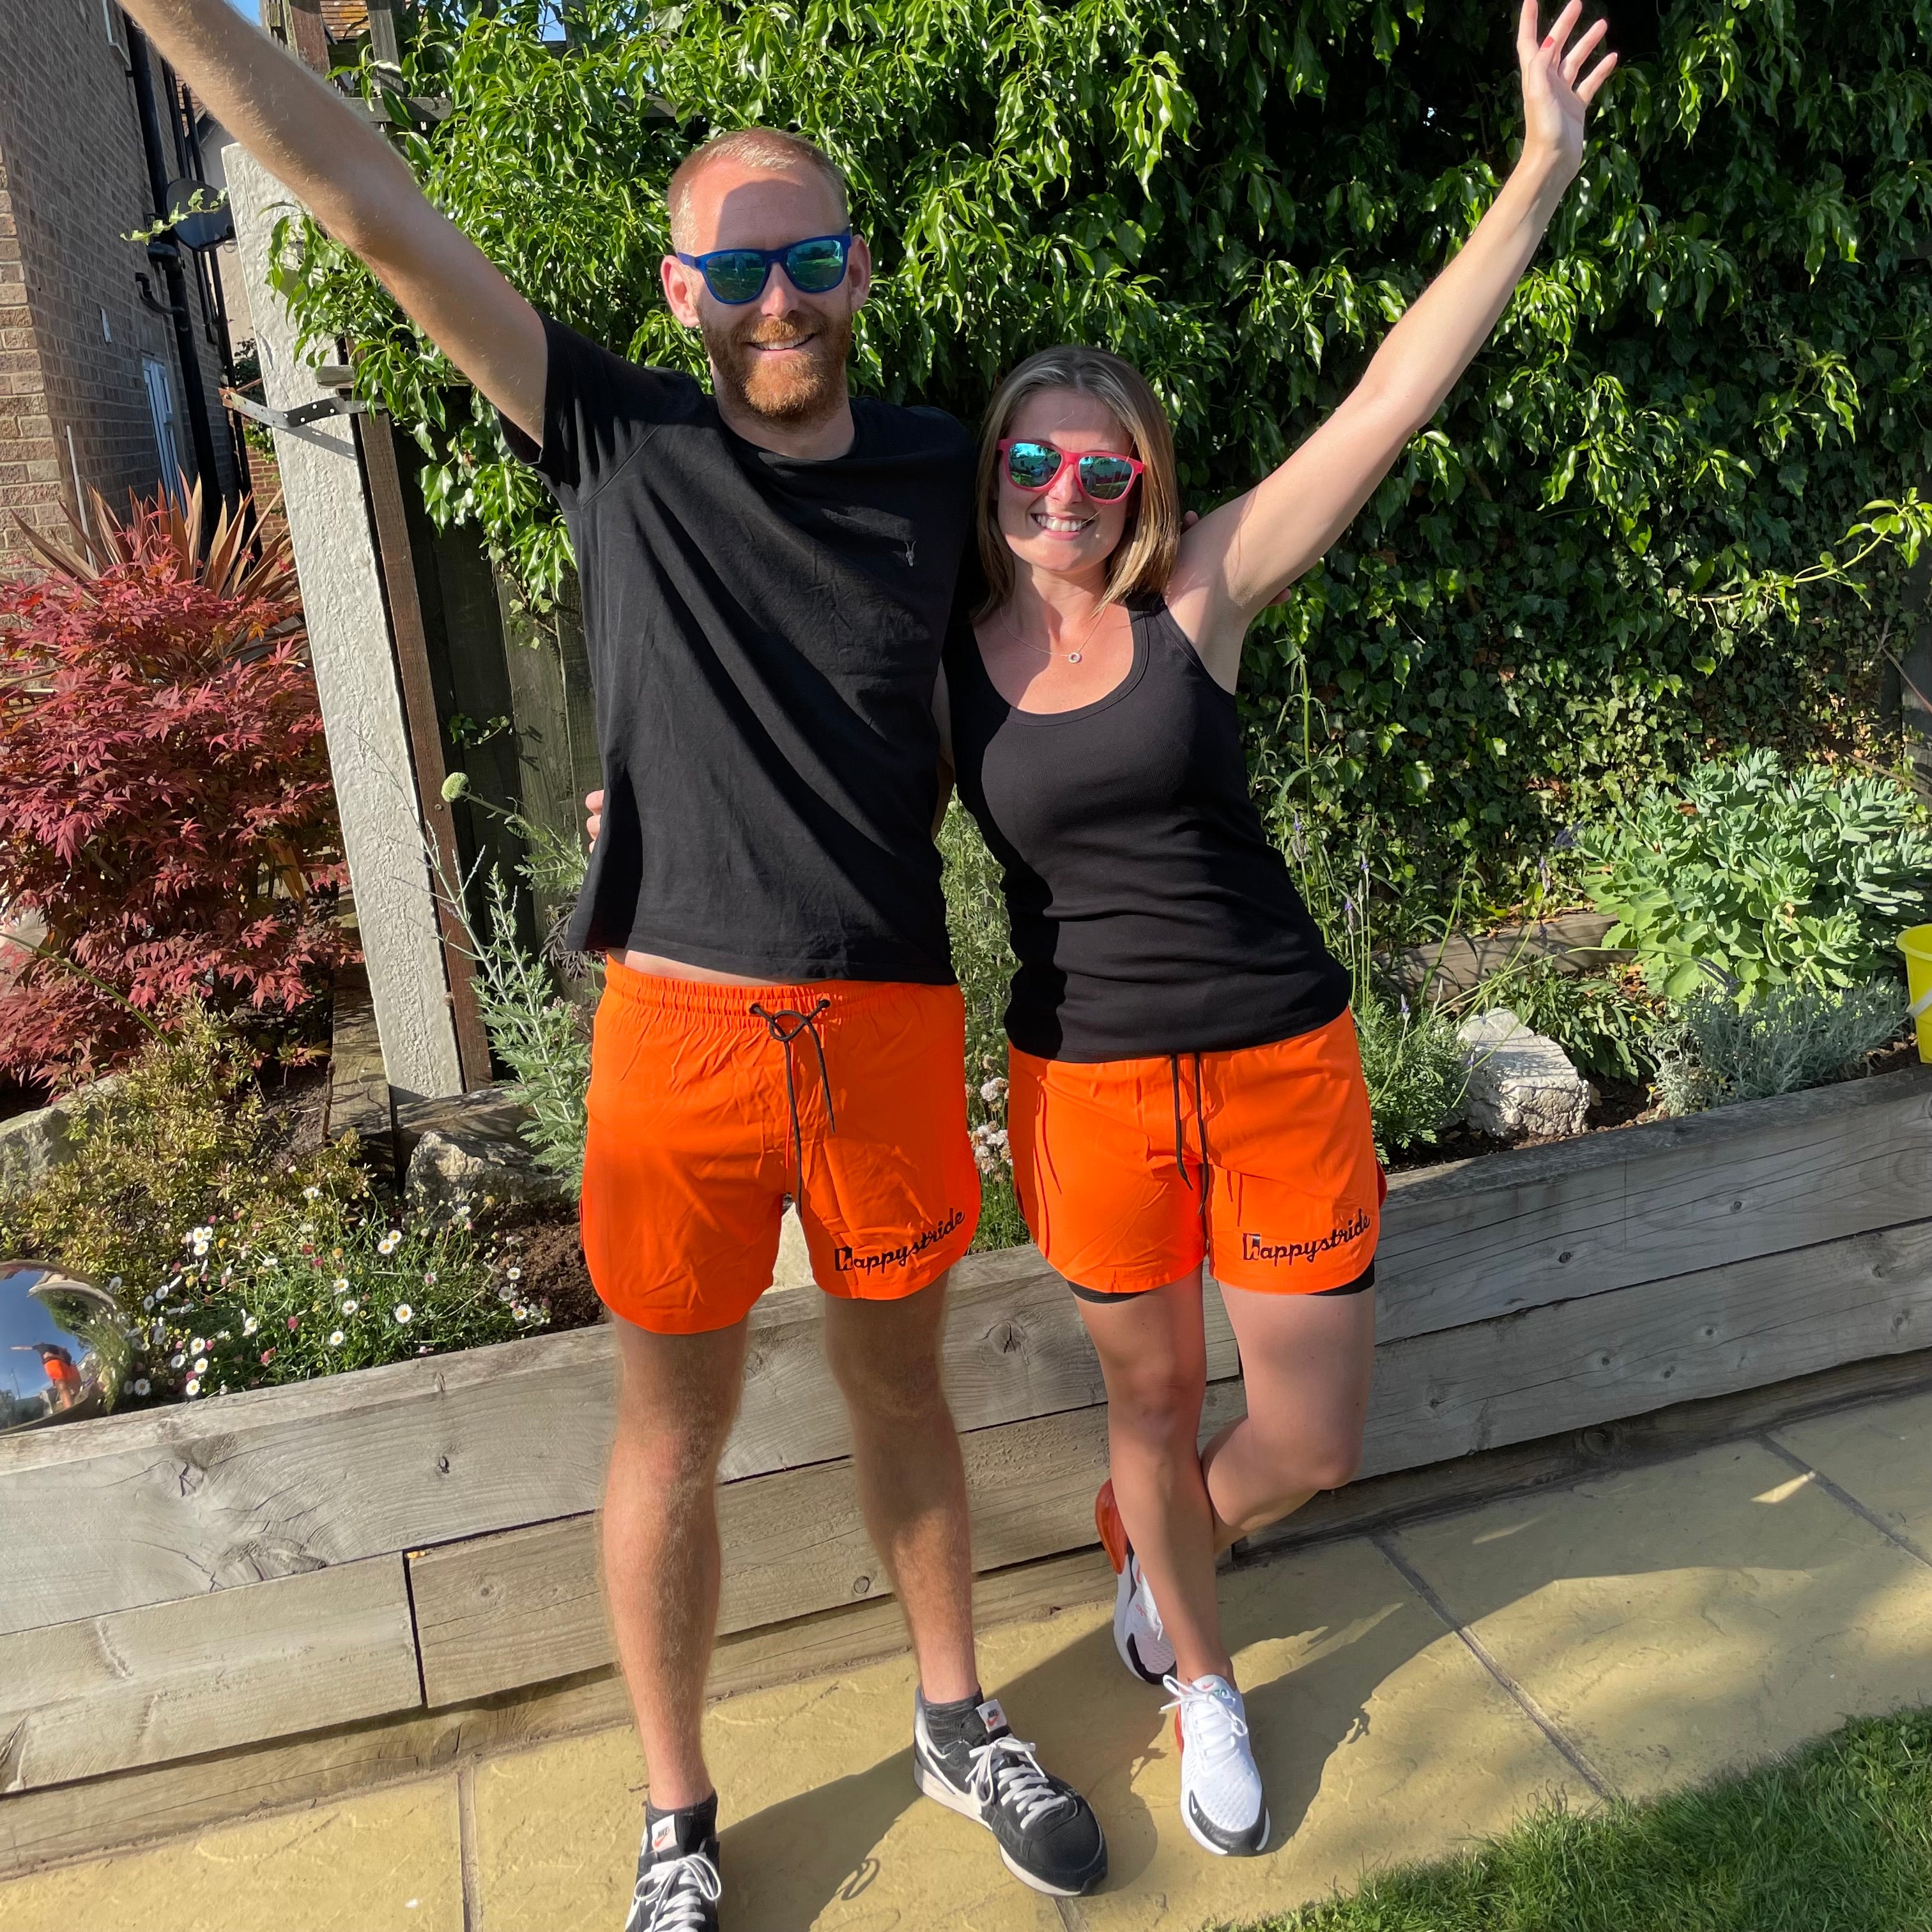 ''Basic b*tch'' orange classic shorts